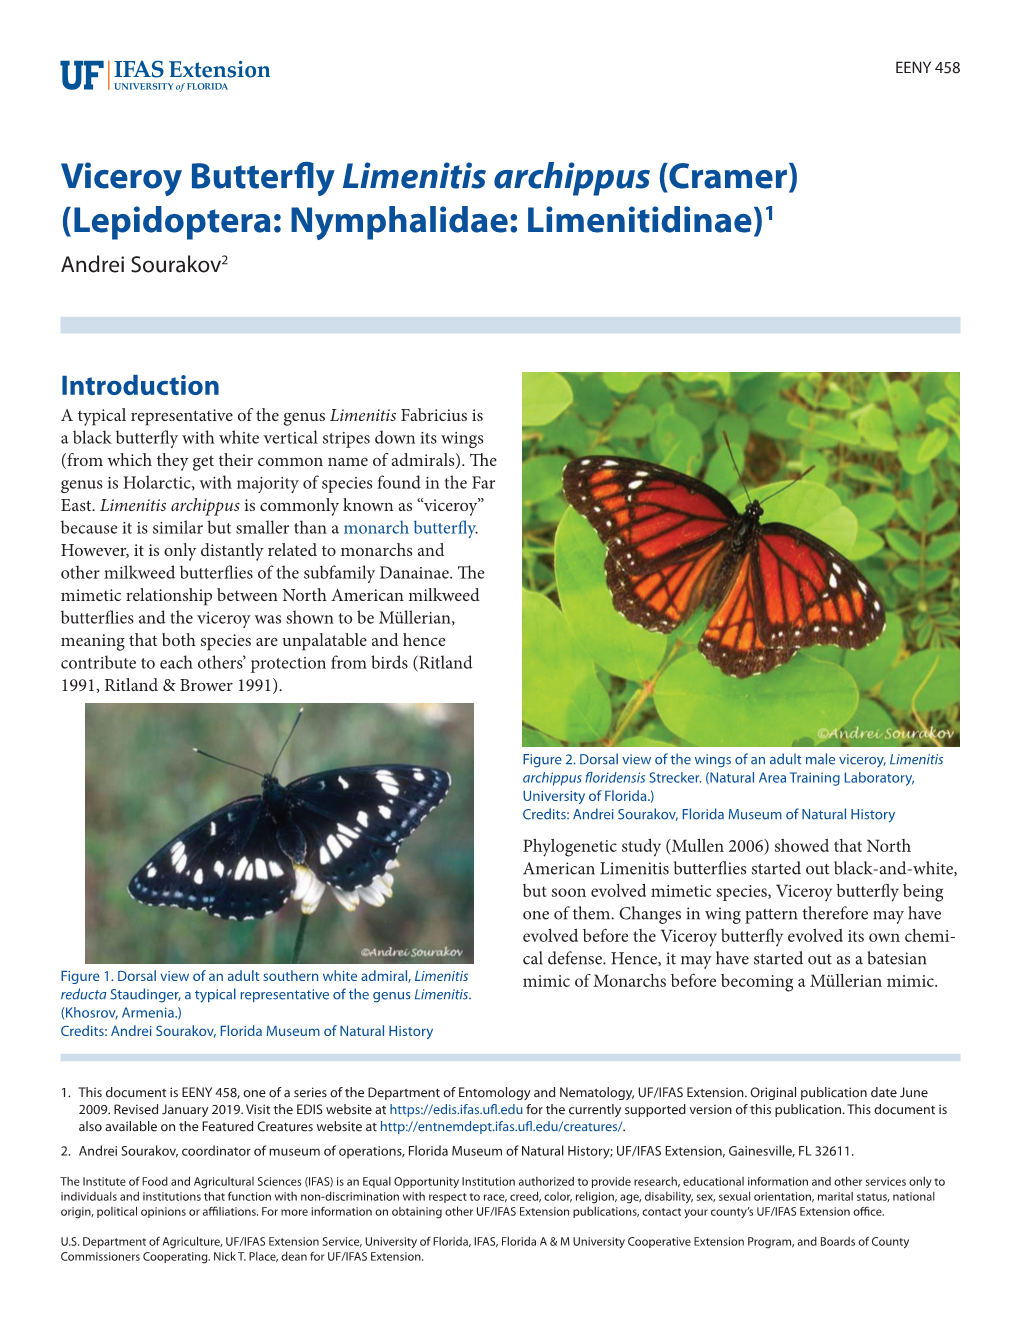 Viceroy Butterfly Limenitis Archippus (Cramer) (Lepidoptera: Nymphalidae: Limenitidinae)1 Andrei Sourakov2